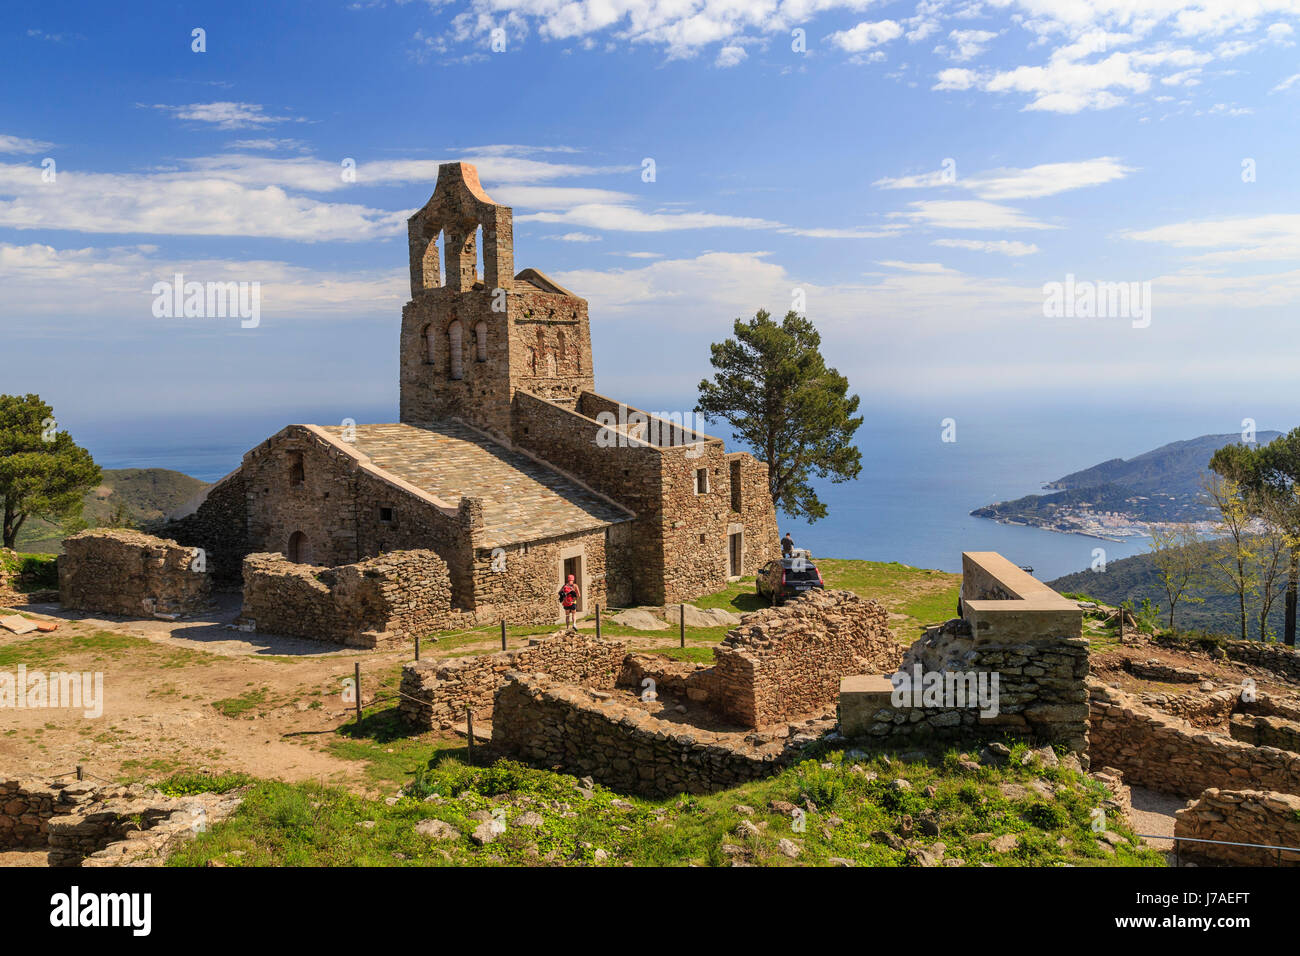 Espagne, Catalogne, Costa Brava, El Port de la Selva, église Santa Elena à proximité du monastère de Sant Pere de Rodes Banque D'Images